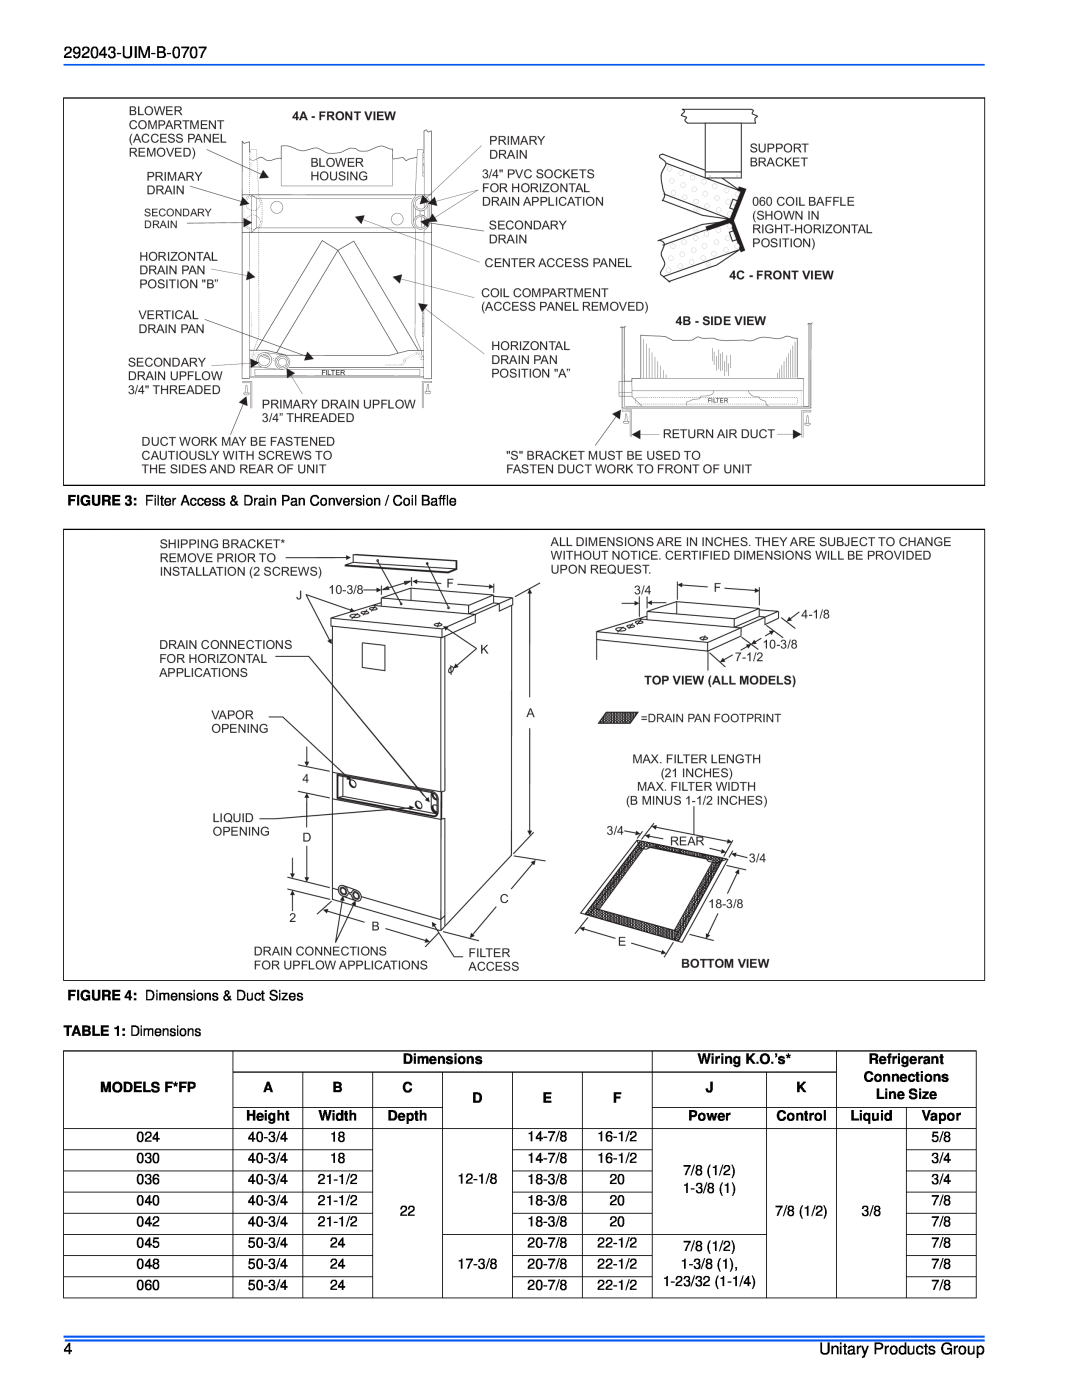 Coleman F*FP installation manual UIM-B-0707, Dimensions, Wiring K.O.’s, Models F*Fp, Power, Vapor 